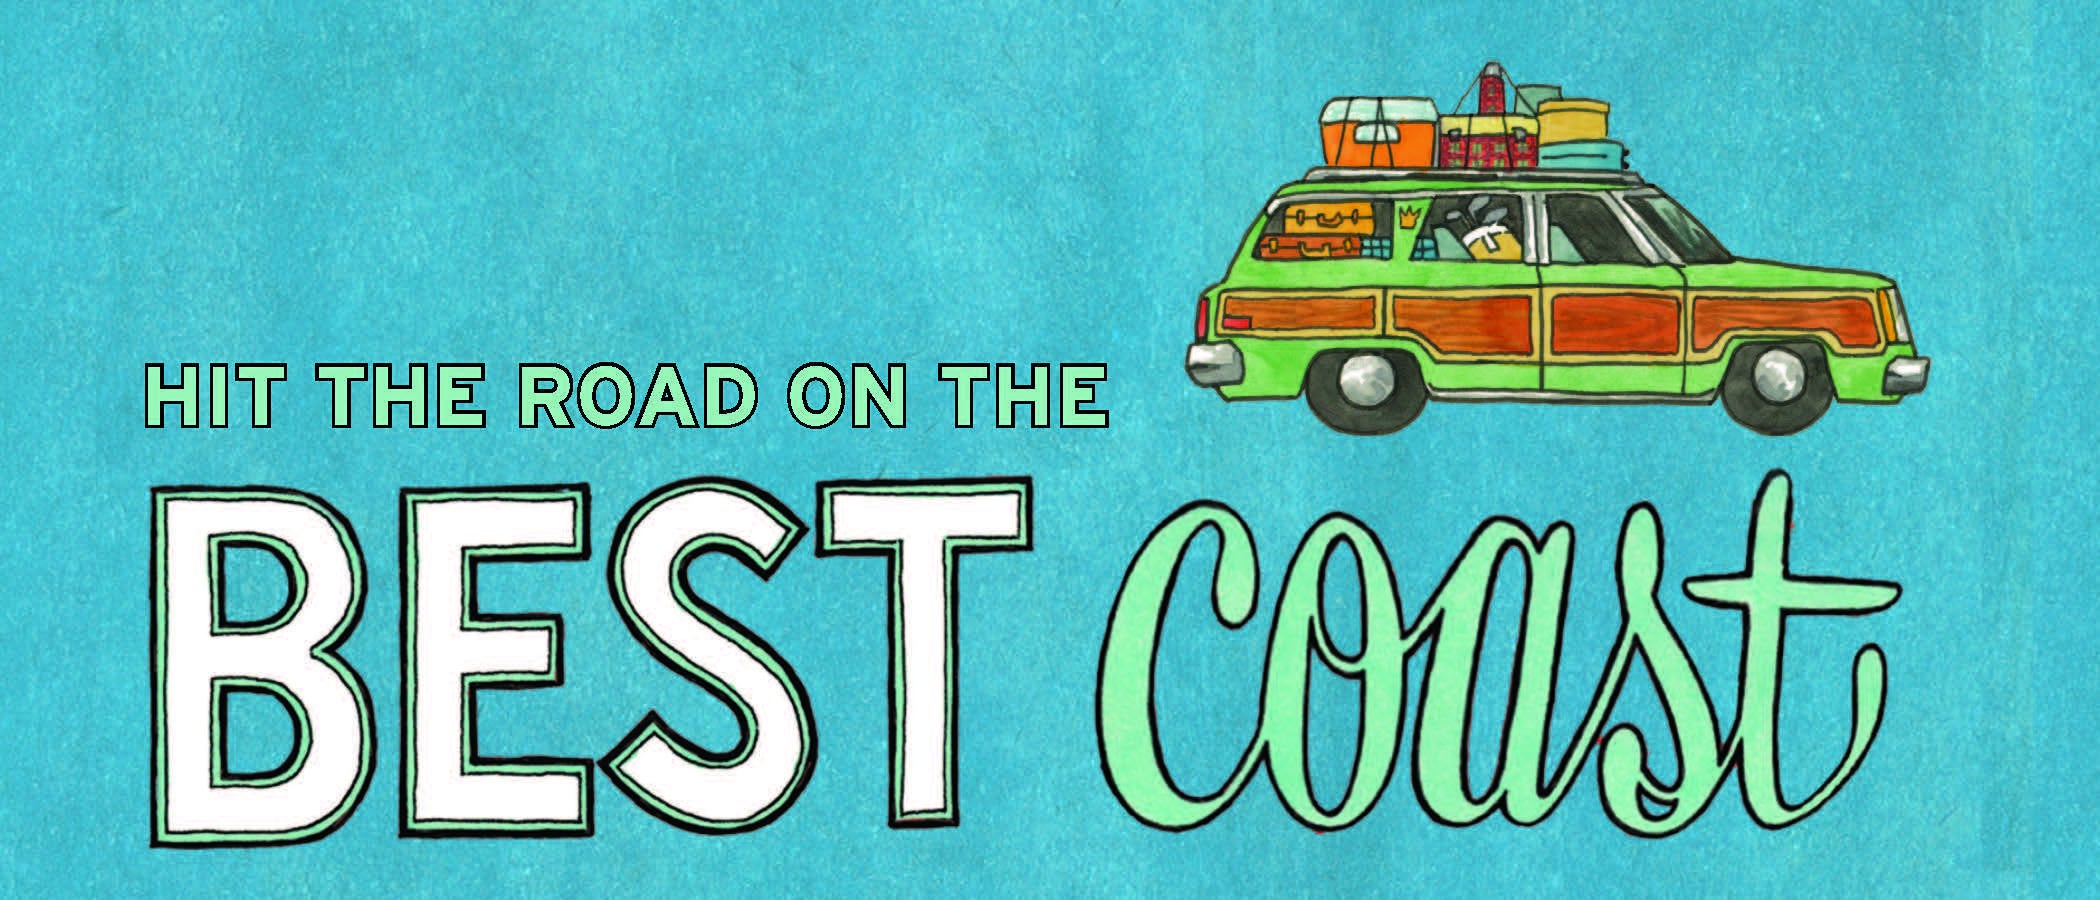 The Best Coast: A Road Trip Atlas